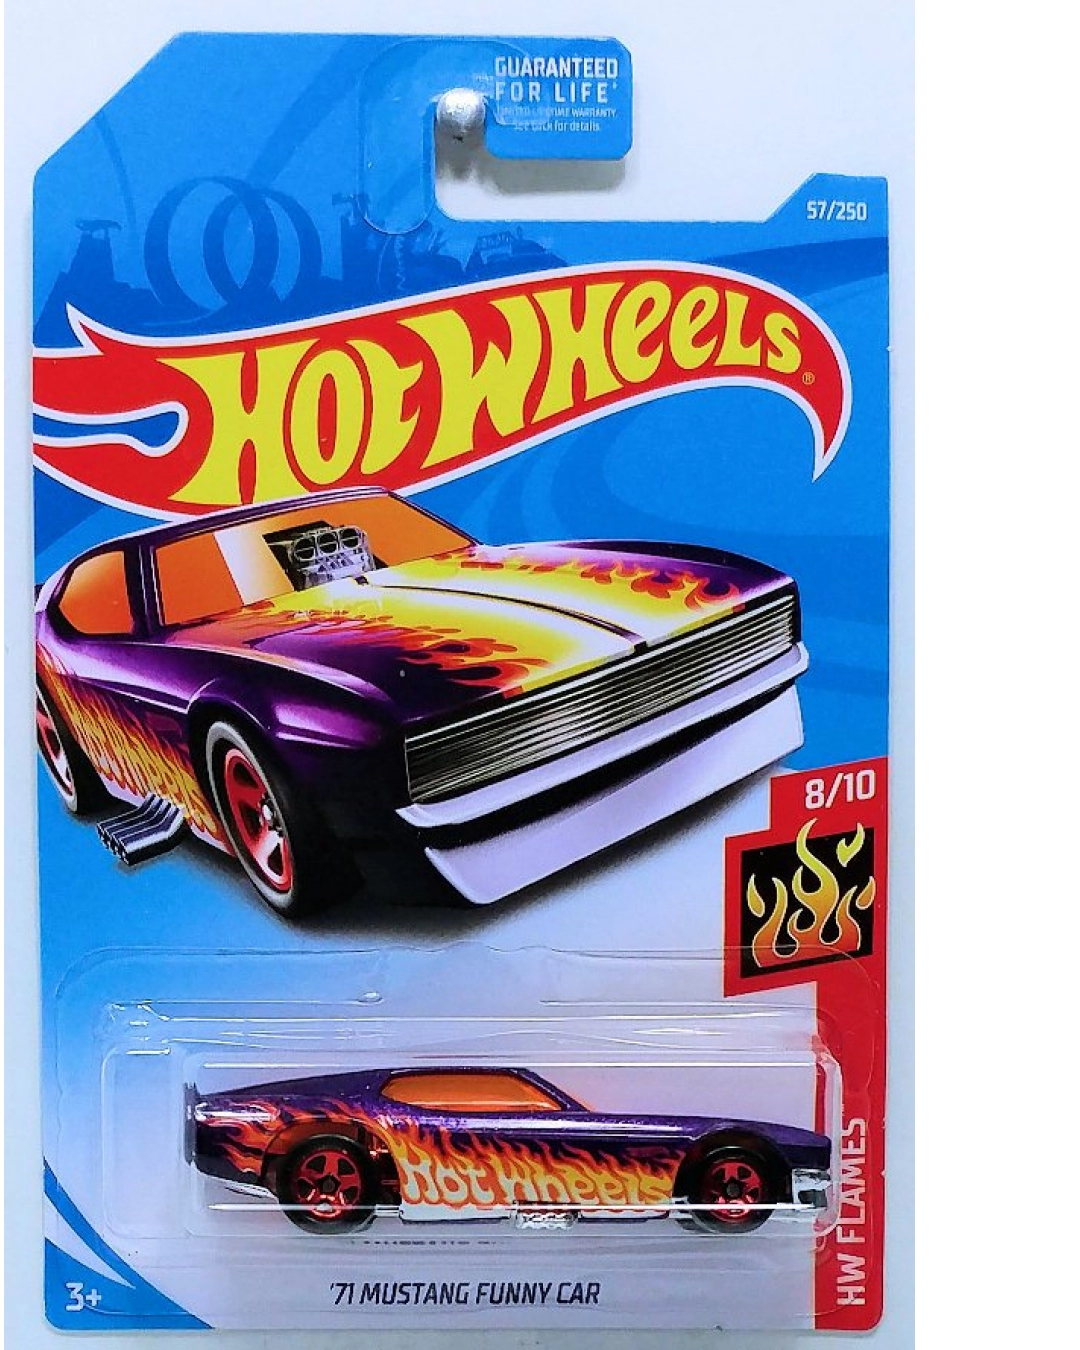 2019 Hot Wheels 57/250 '71 Mustang Funny Car 8/10 HW Flames NEW 